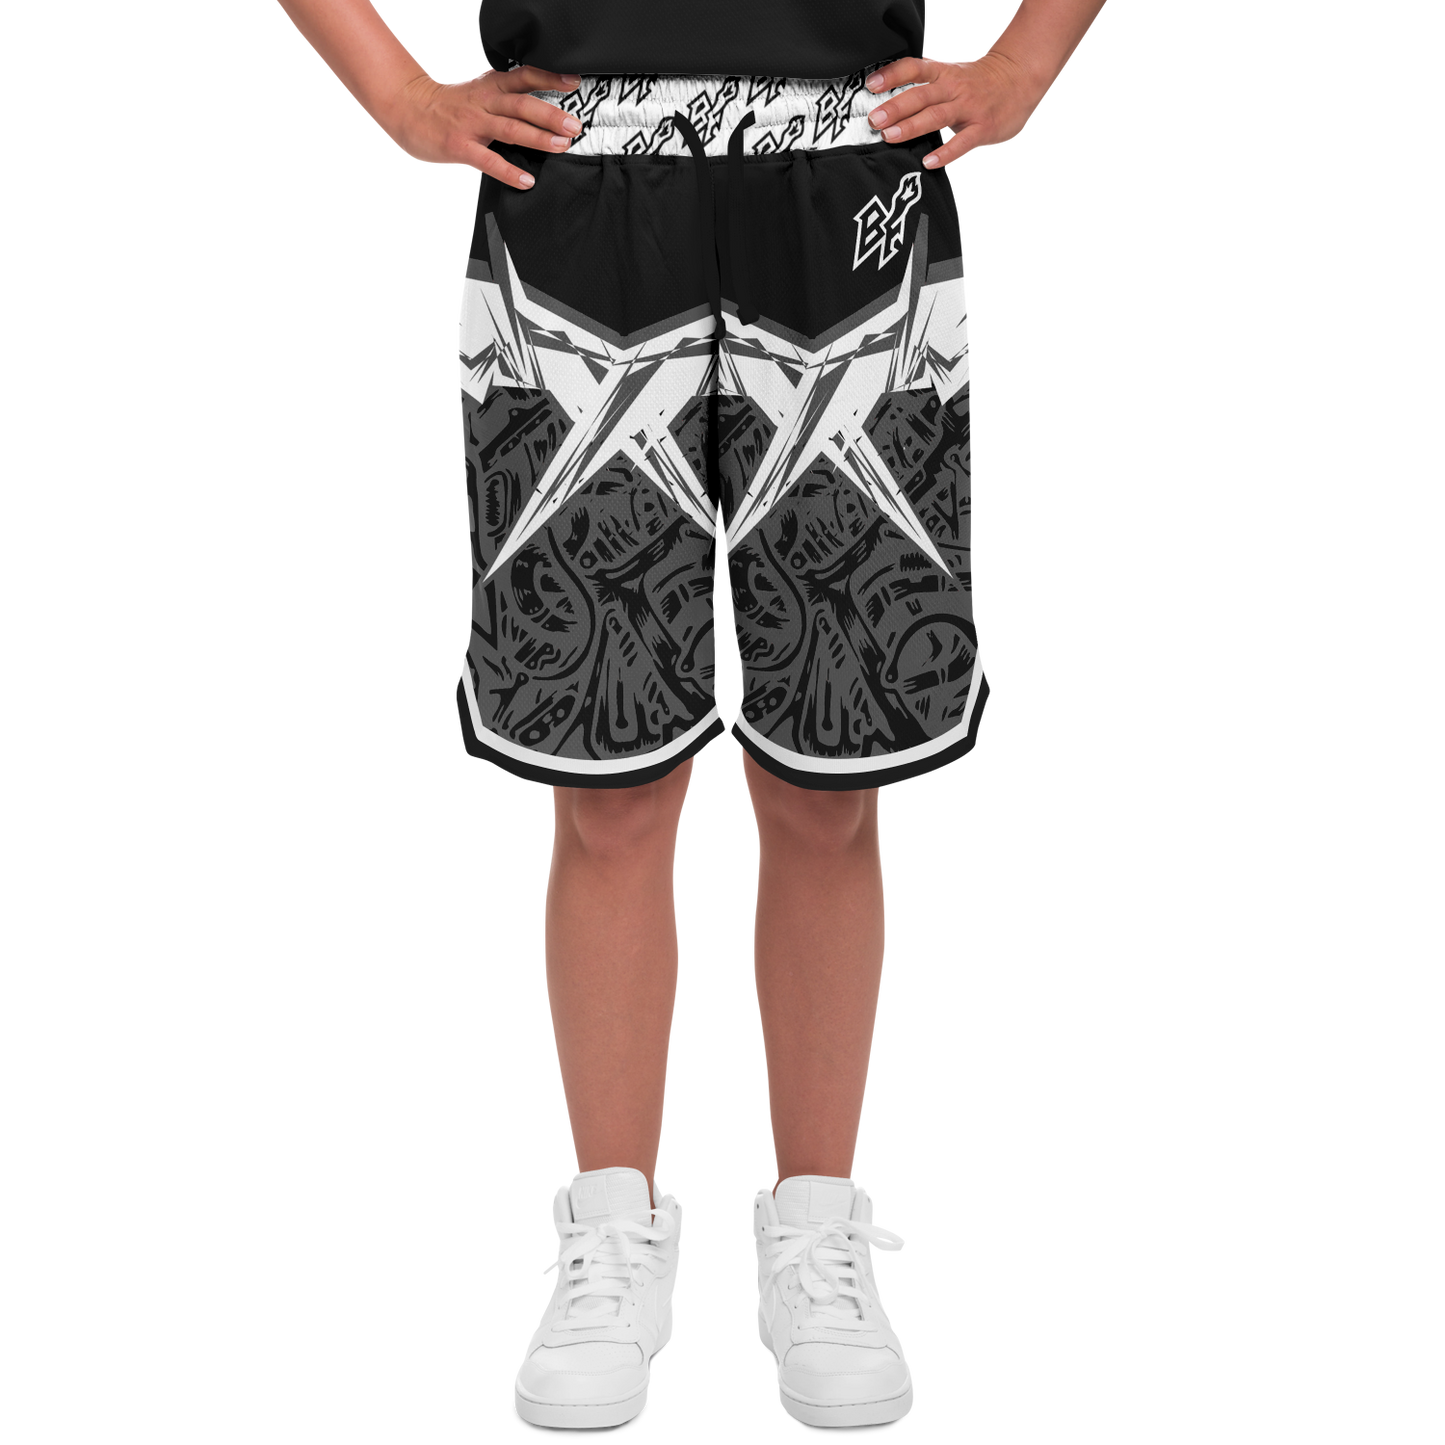 BlackFox Basketball Shorts